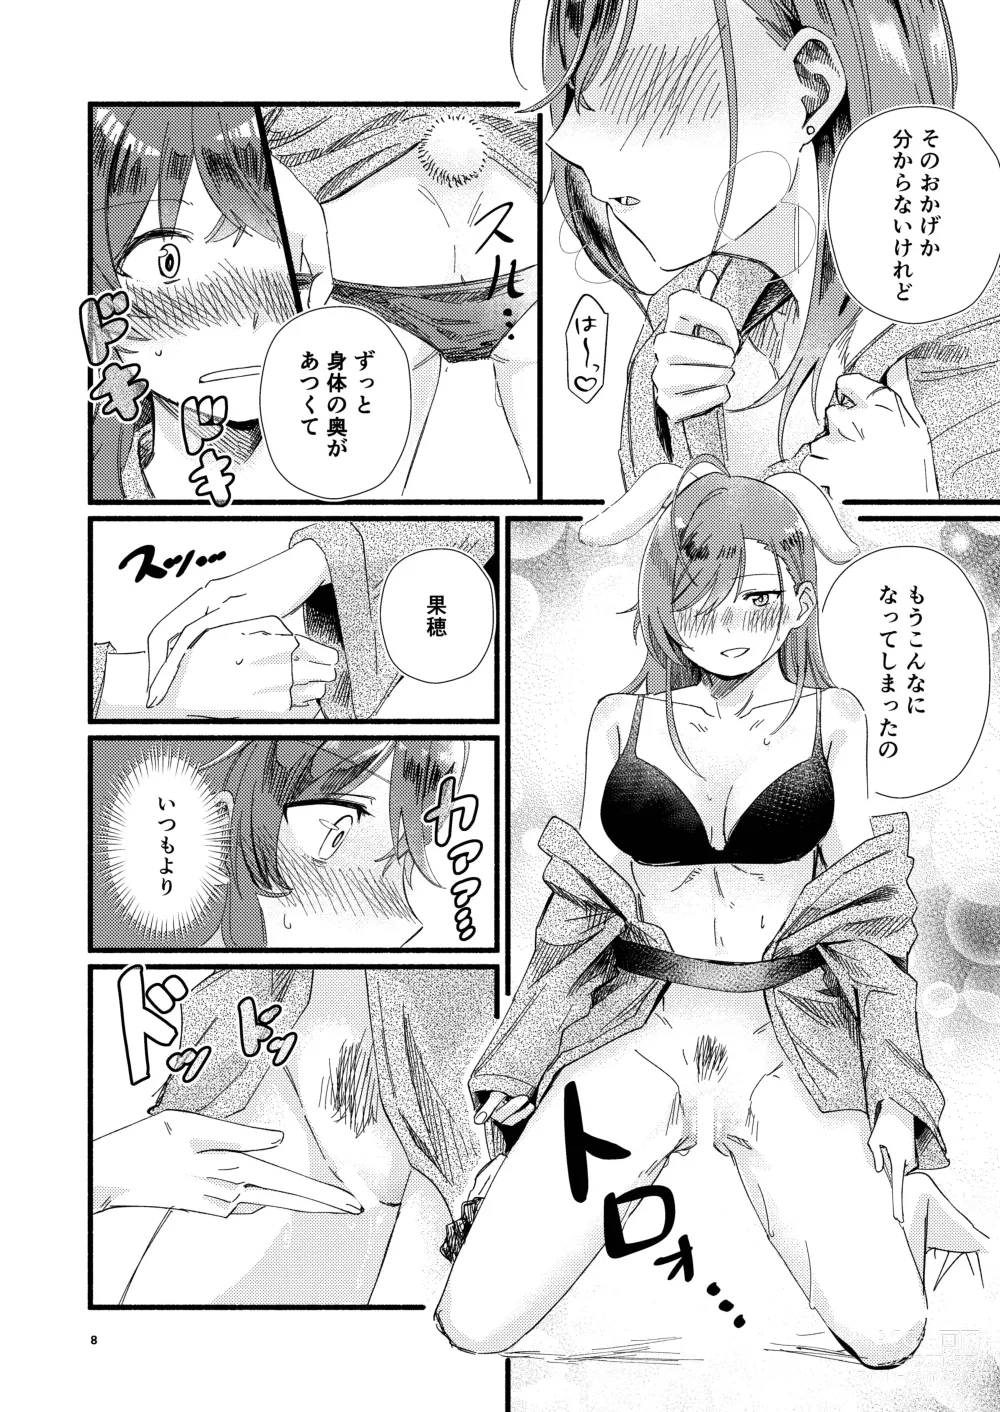 Page 8 of doujinshi Usagi no Ongaeshi